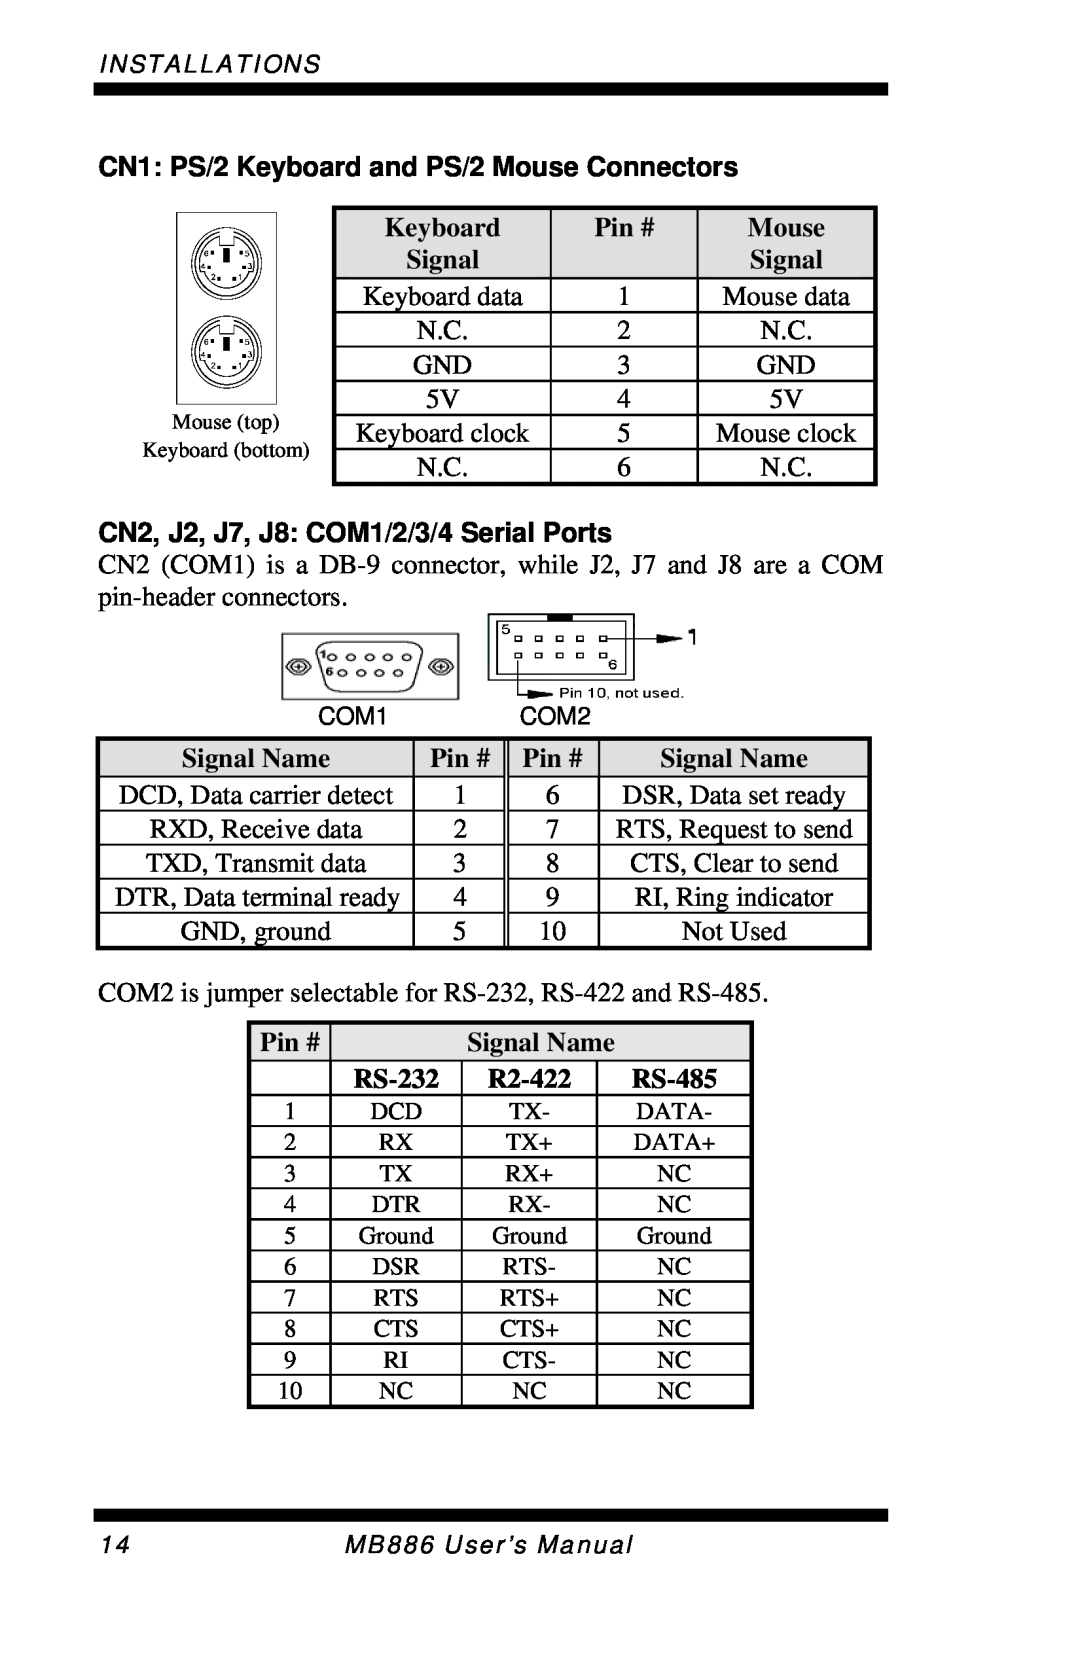 Intel MB886 user manual CN1 PS/2 Keyboard and PS/2 Mouse Connectors, CN2, J2, J7, J8 COM1/2/3/4 Serial Ports 